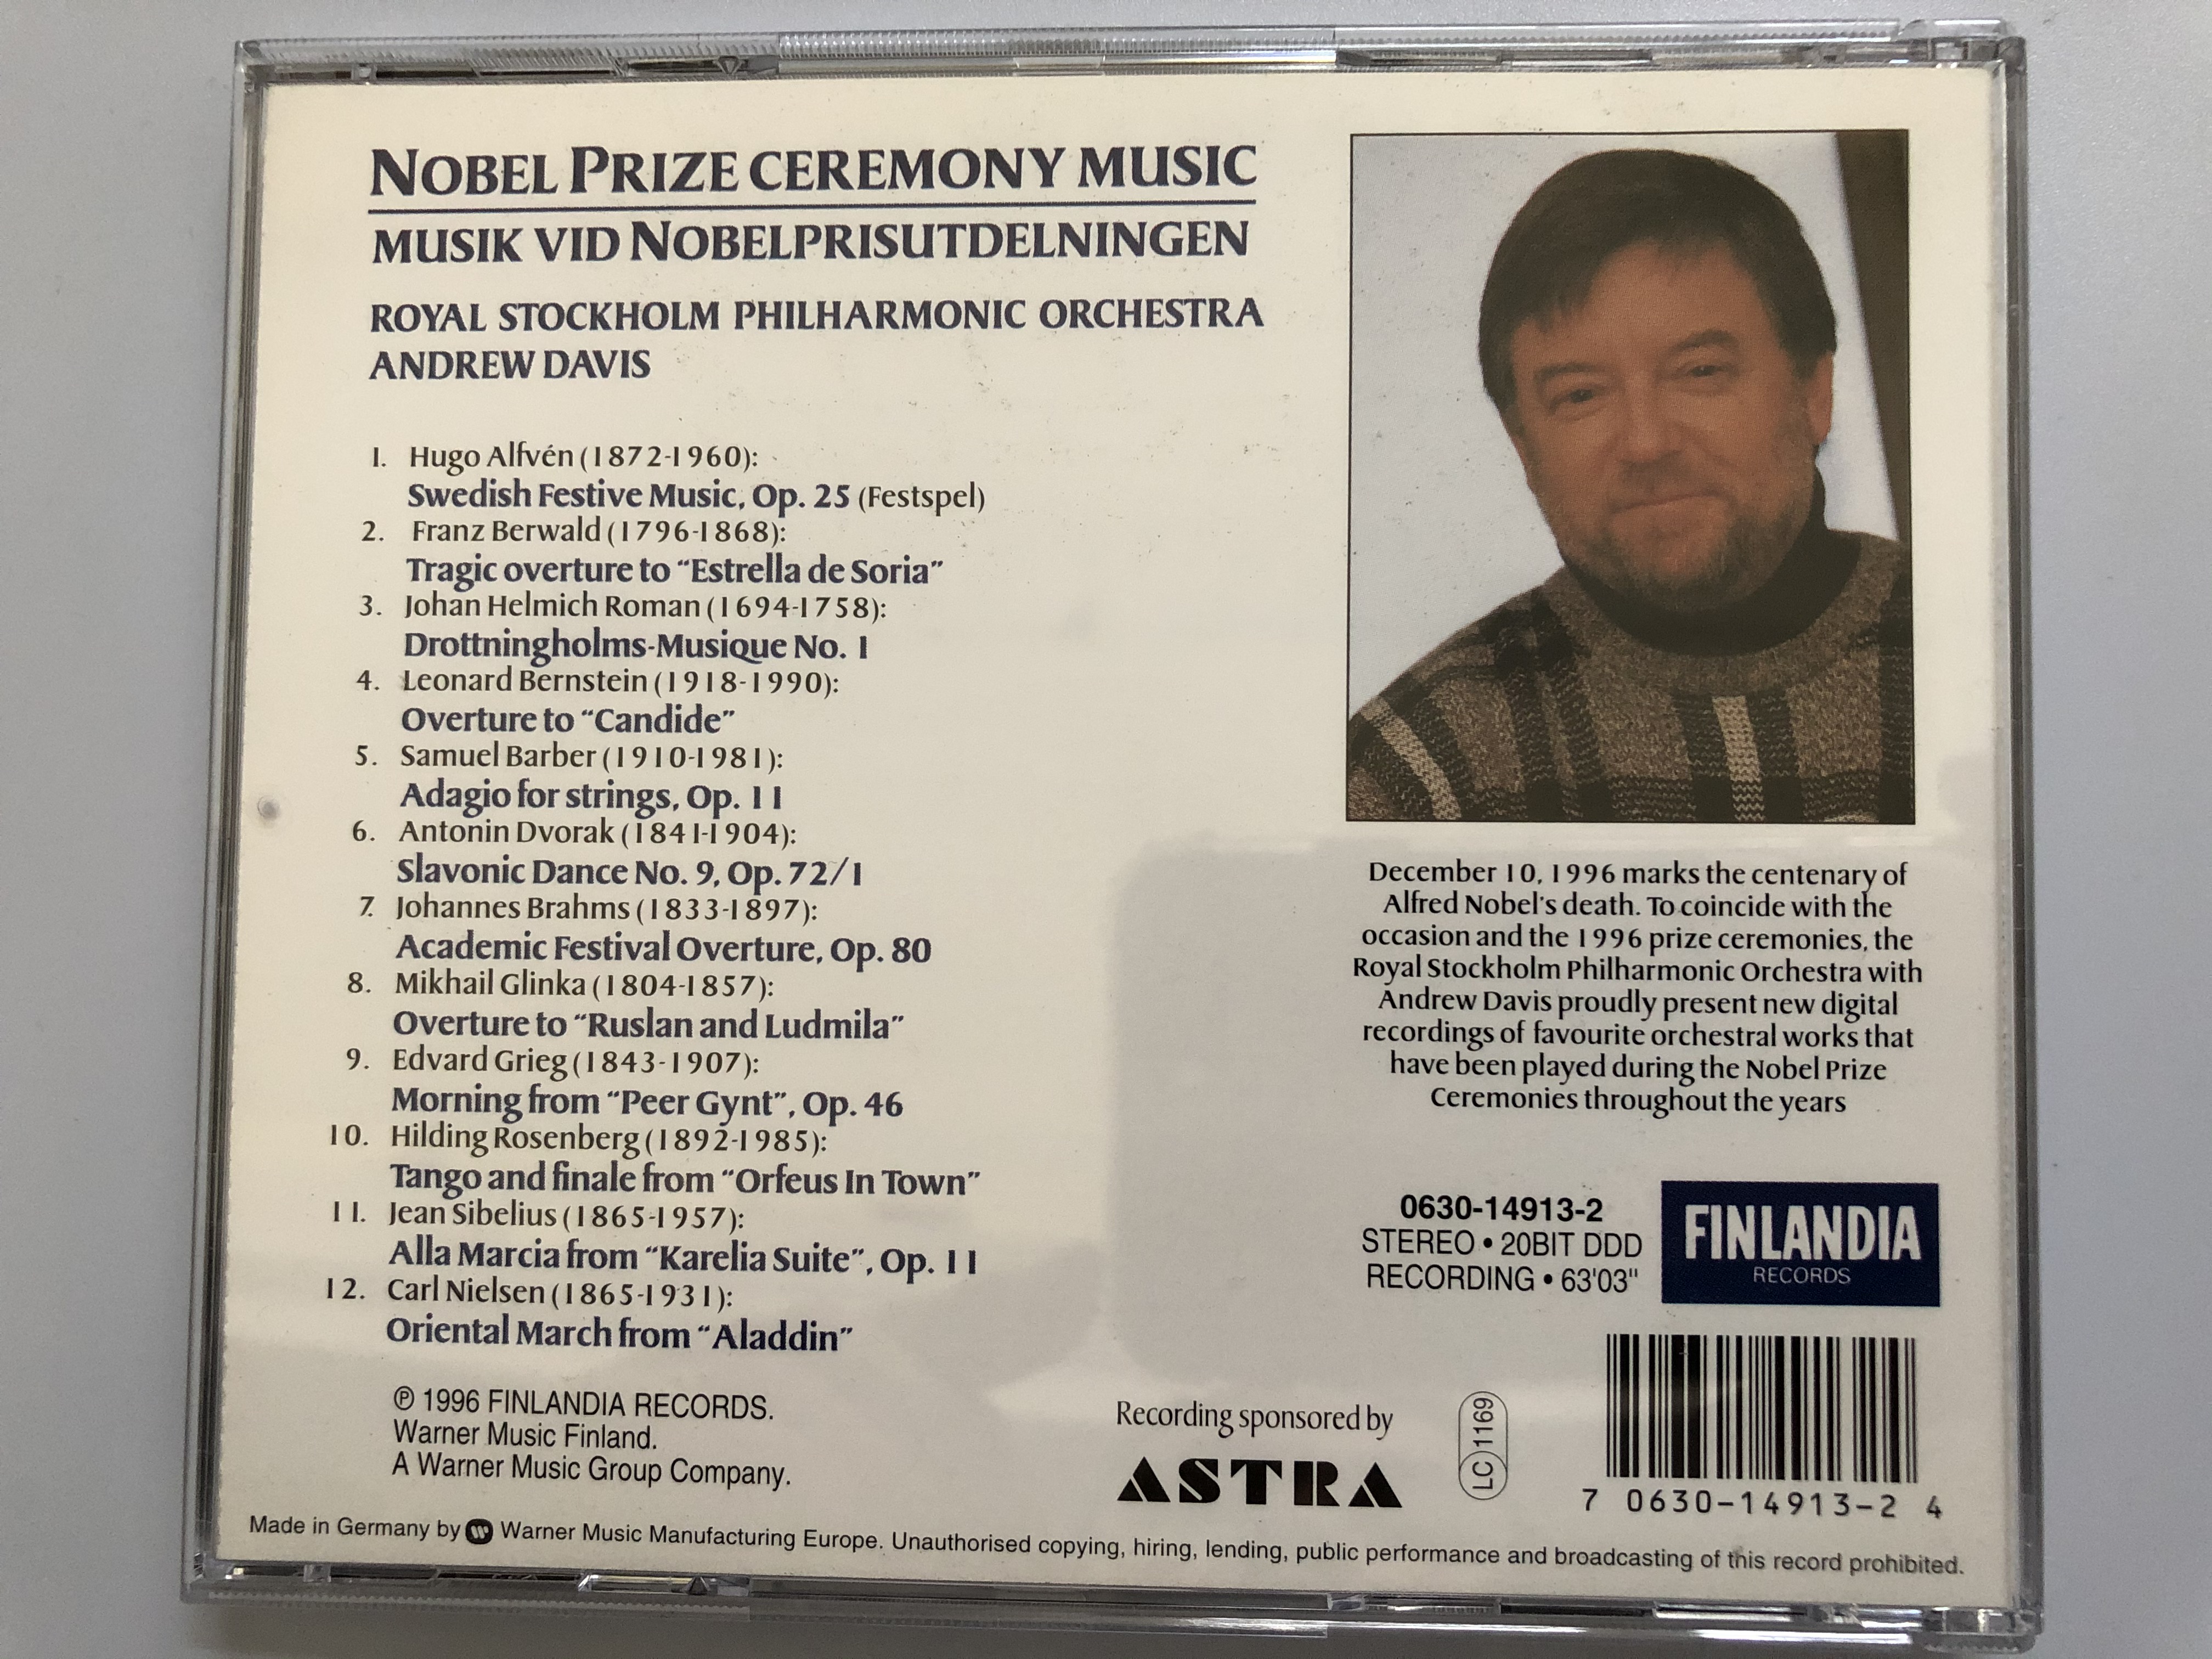 nobel-prize-ceremony-music-musik-vid-nobelprisutdelningen-royal-stockholm-philharmonic-orchestra-andrew-davis-finlandia-records-audio-cd-1996-stereo-0630-14913-2-8-.jpg